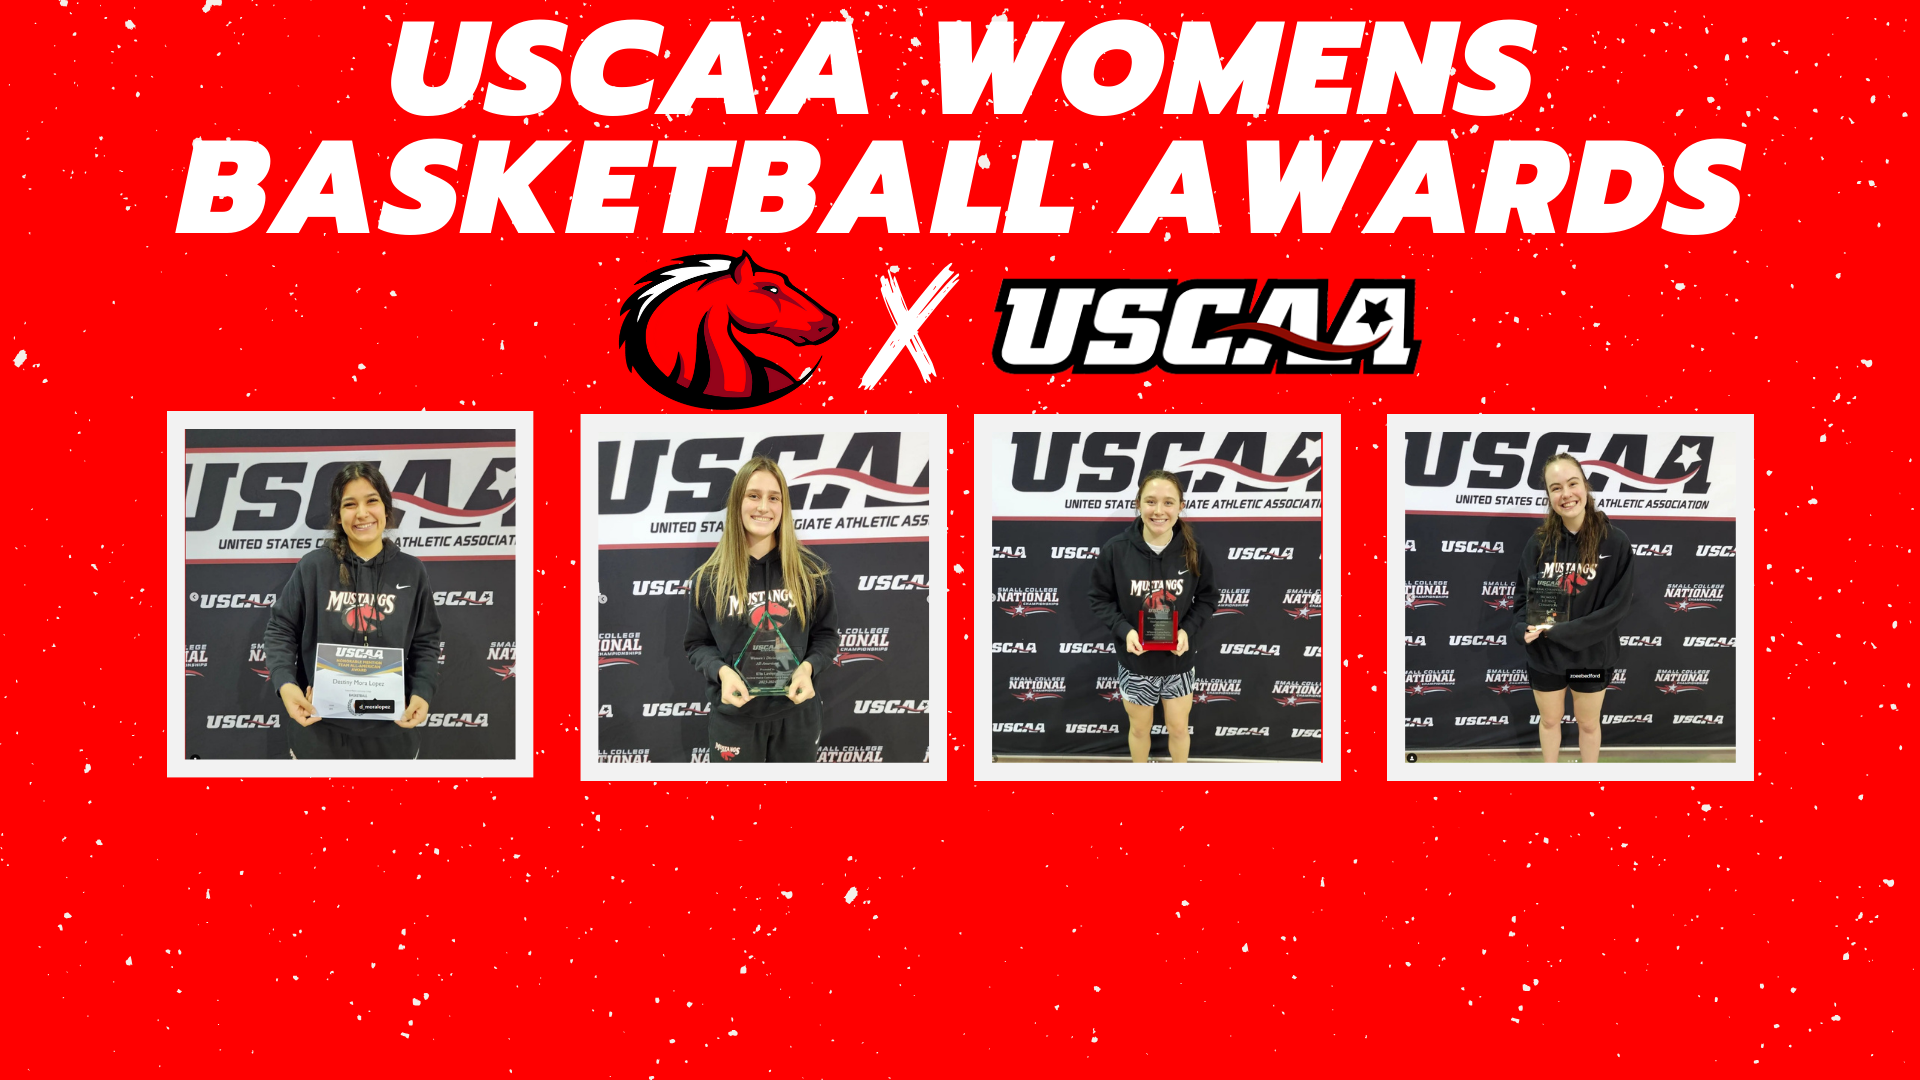 USCAA Women's Basketball Awards